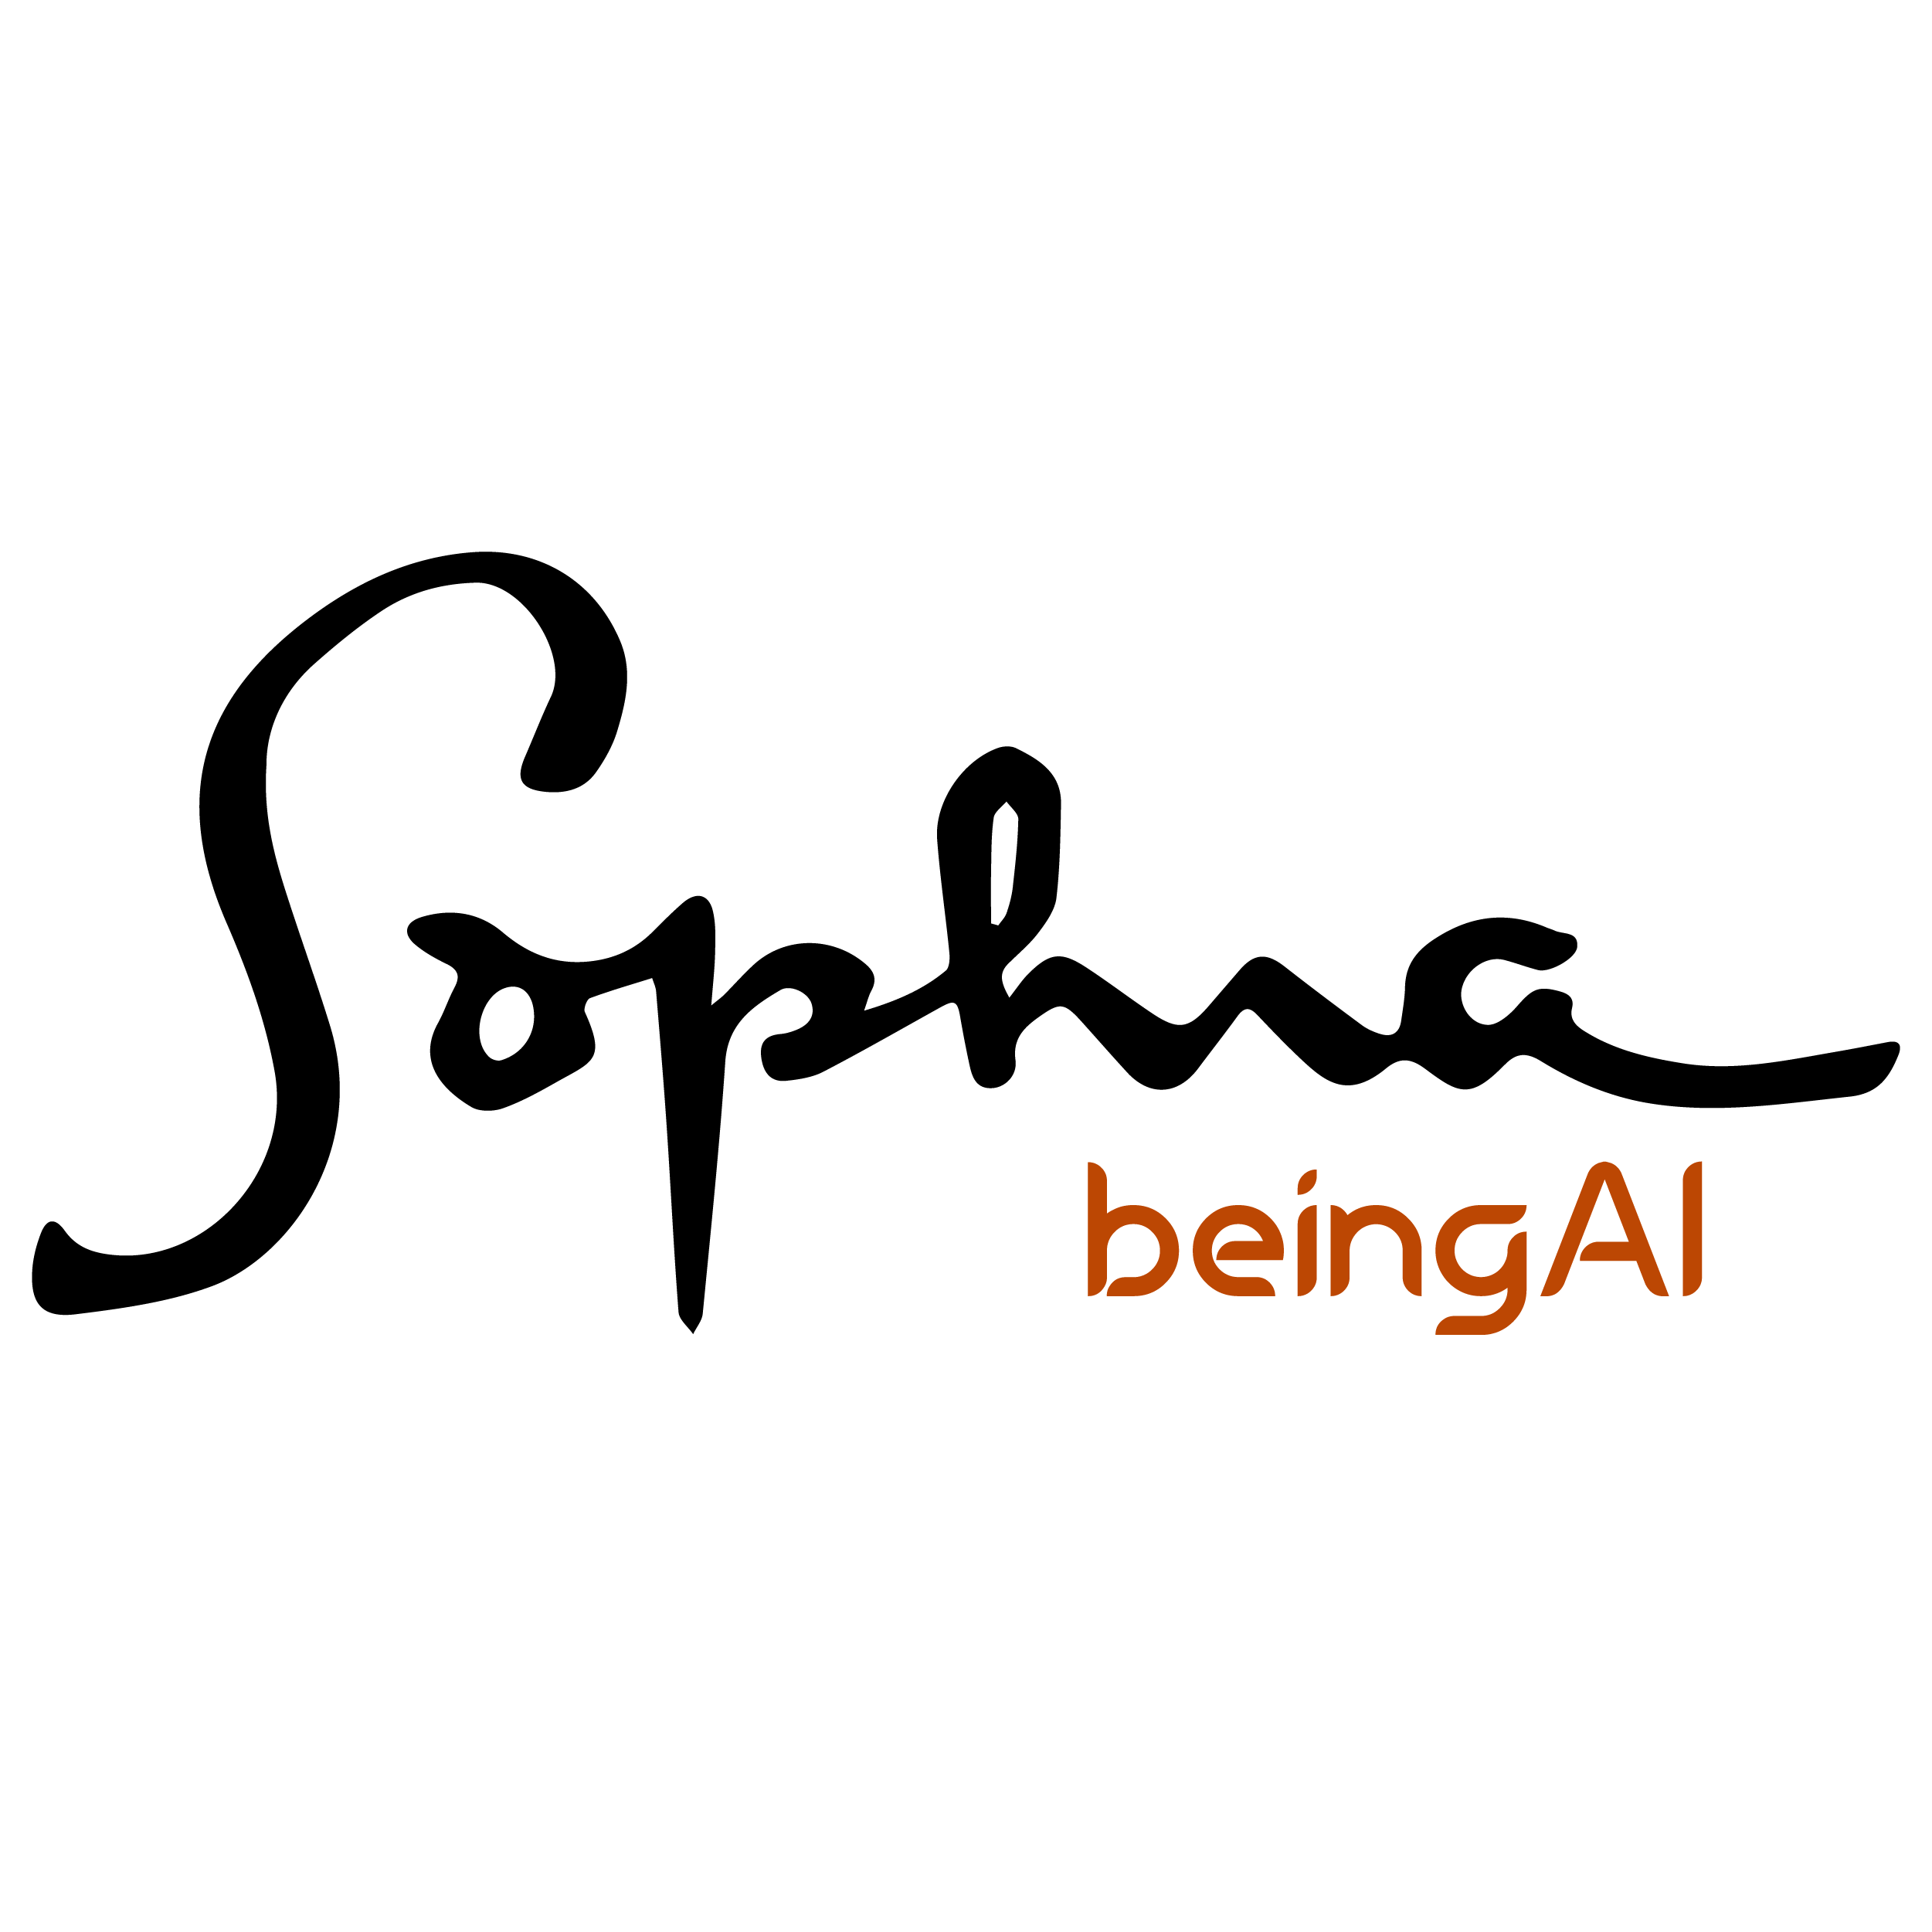 sophia beingai logo 2